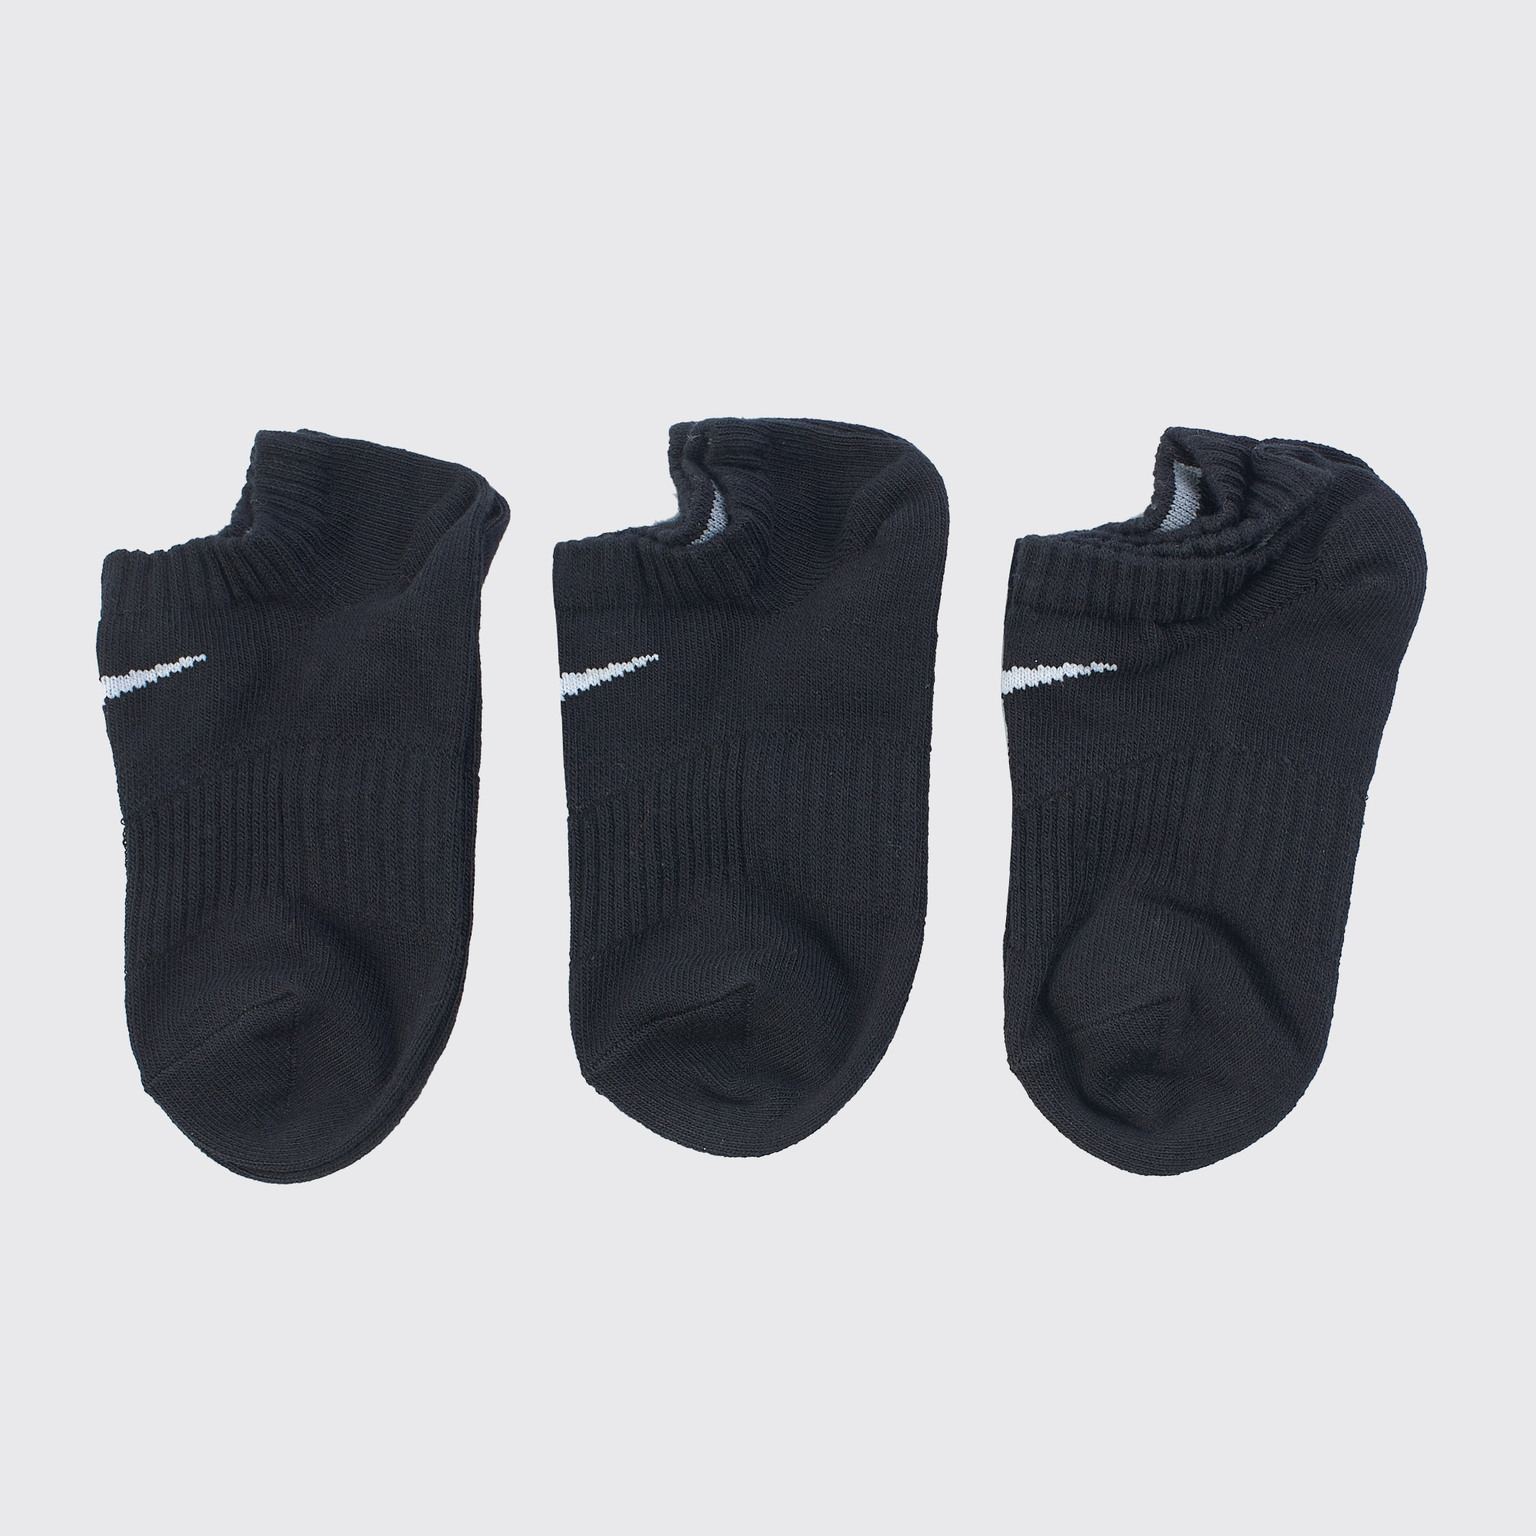 Cobertizo Sembrar Decorar Комплект носков (3 пары) Nike SX4705-001 — купить; цена, фото, доставка